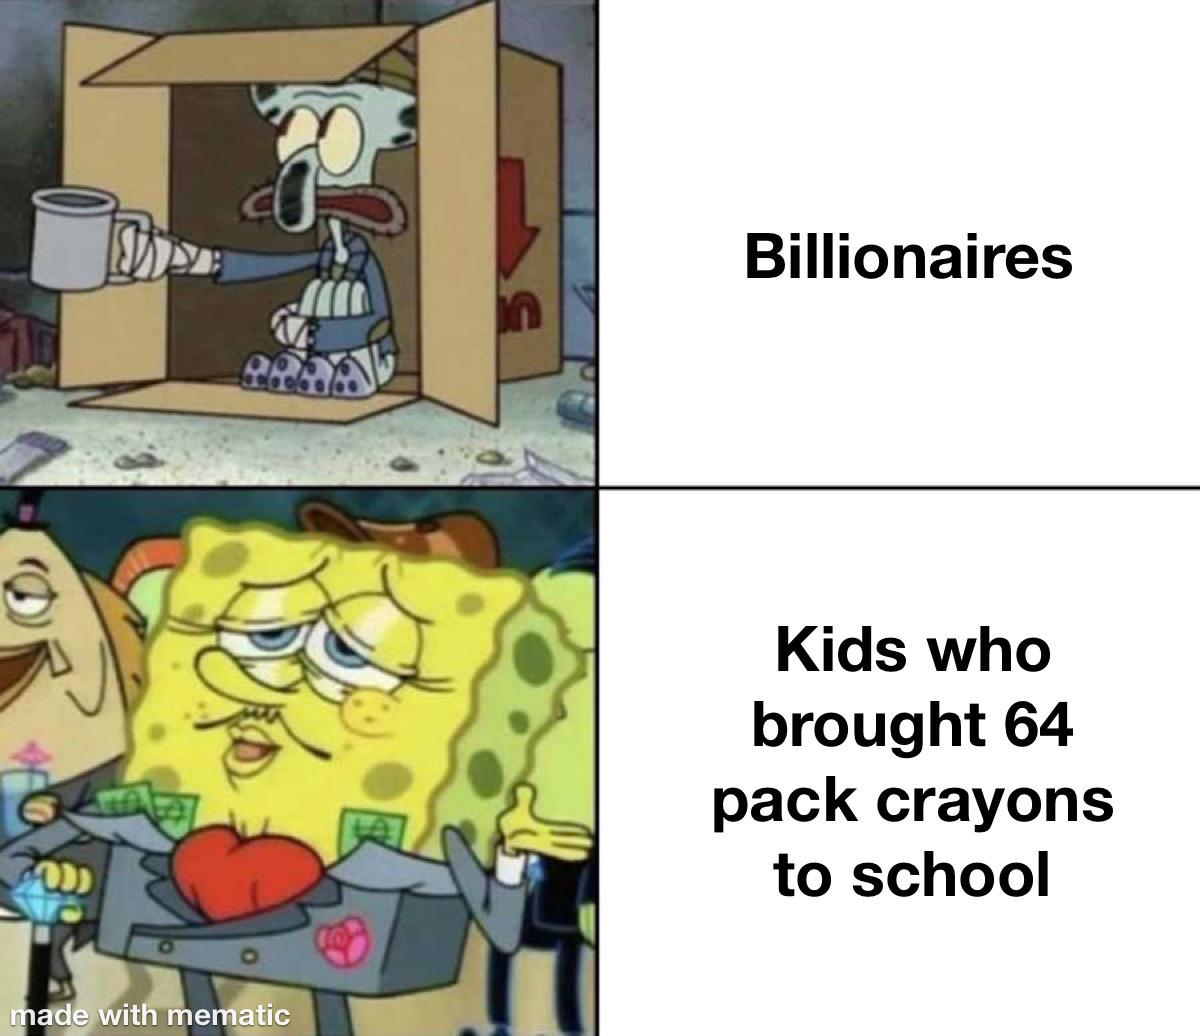 poor squidward rich spongebob meme - De Billionaires Kids who brought 64 pack crayons to school 200 made with mematic